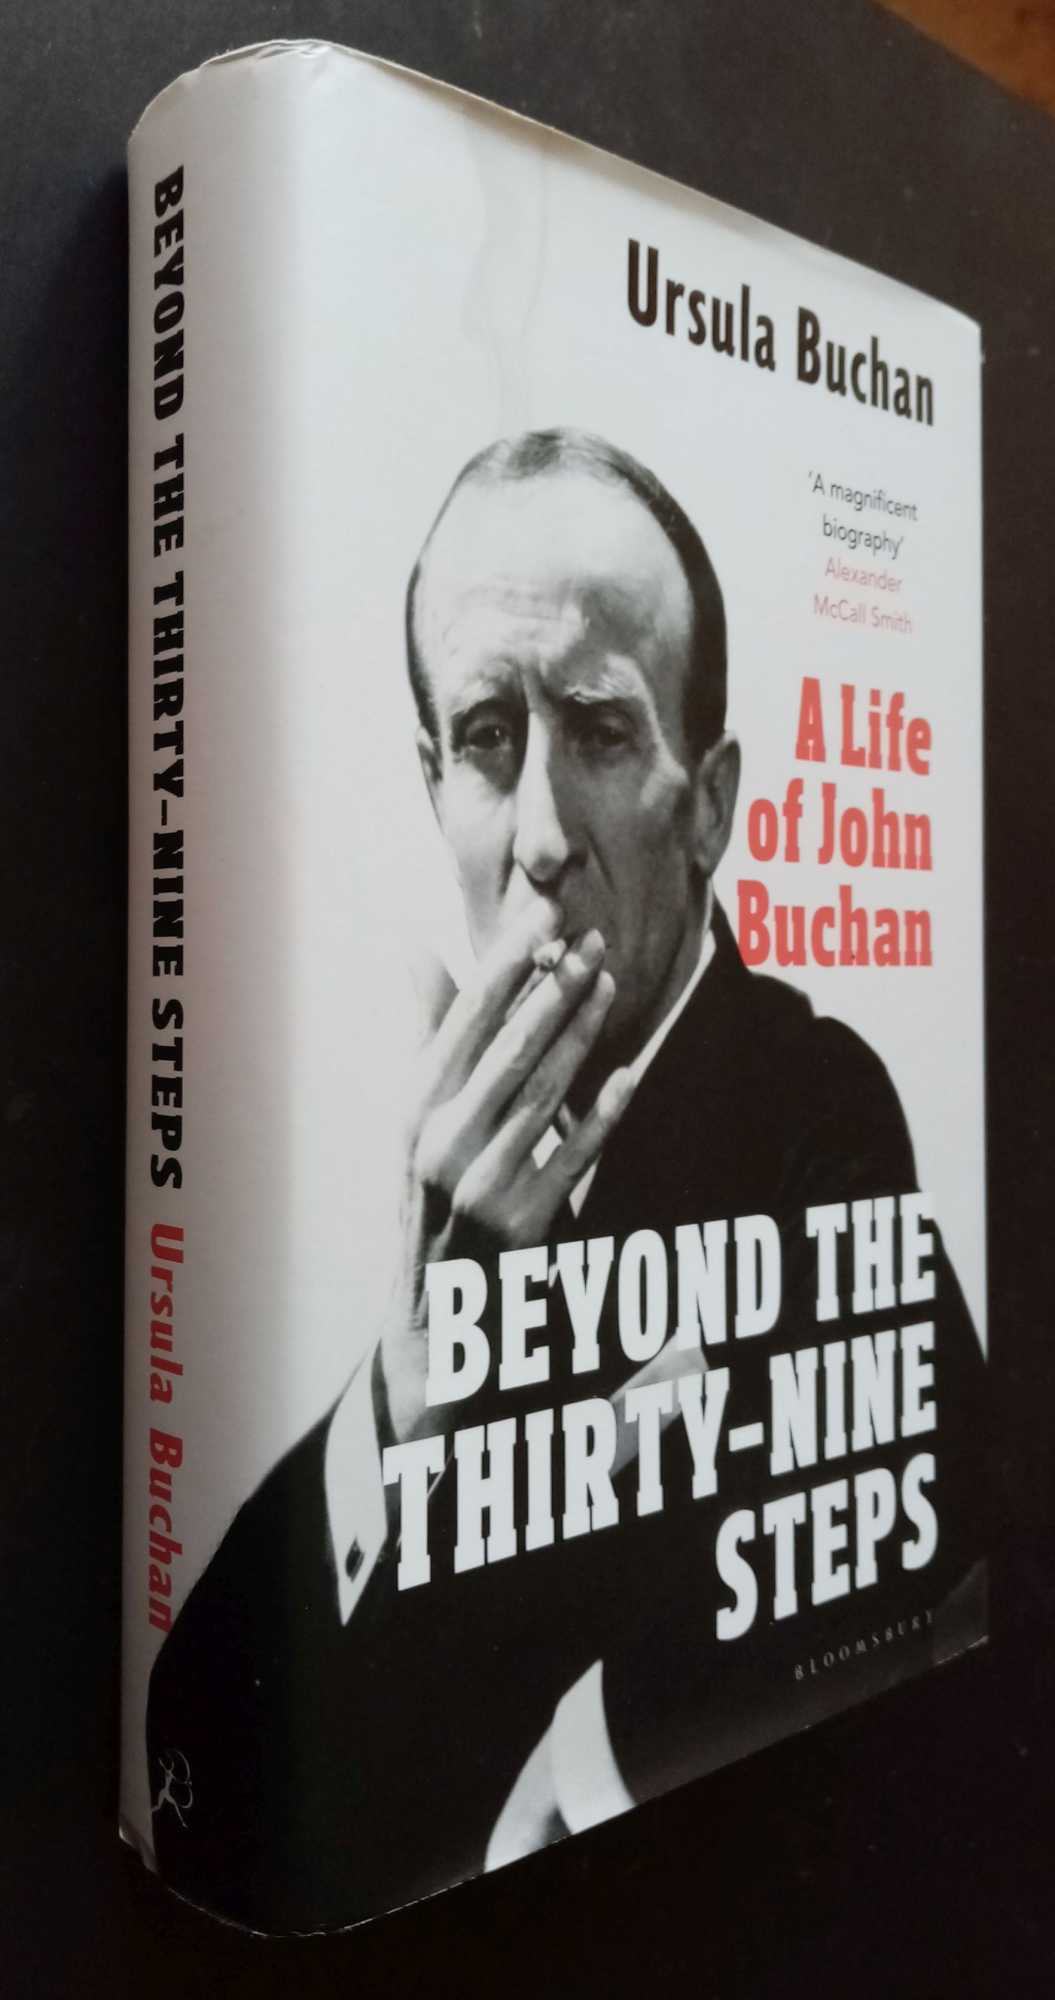 Ursula Buchan - Beyond the Thirty-Nine Steps: A Life of John Buchan